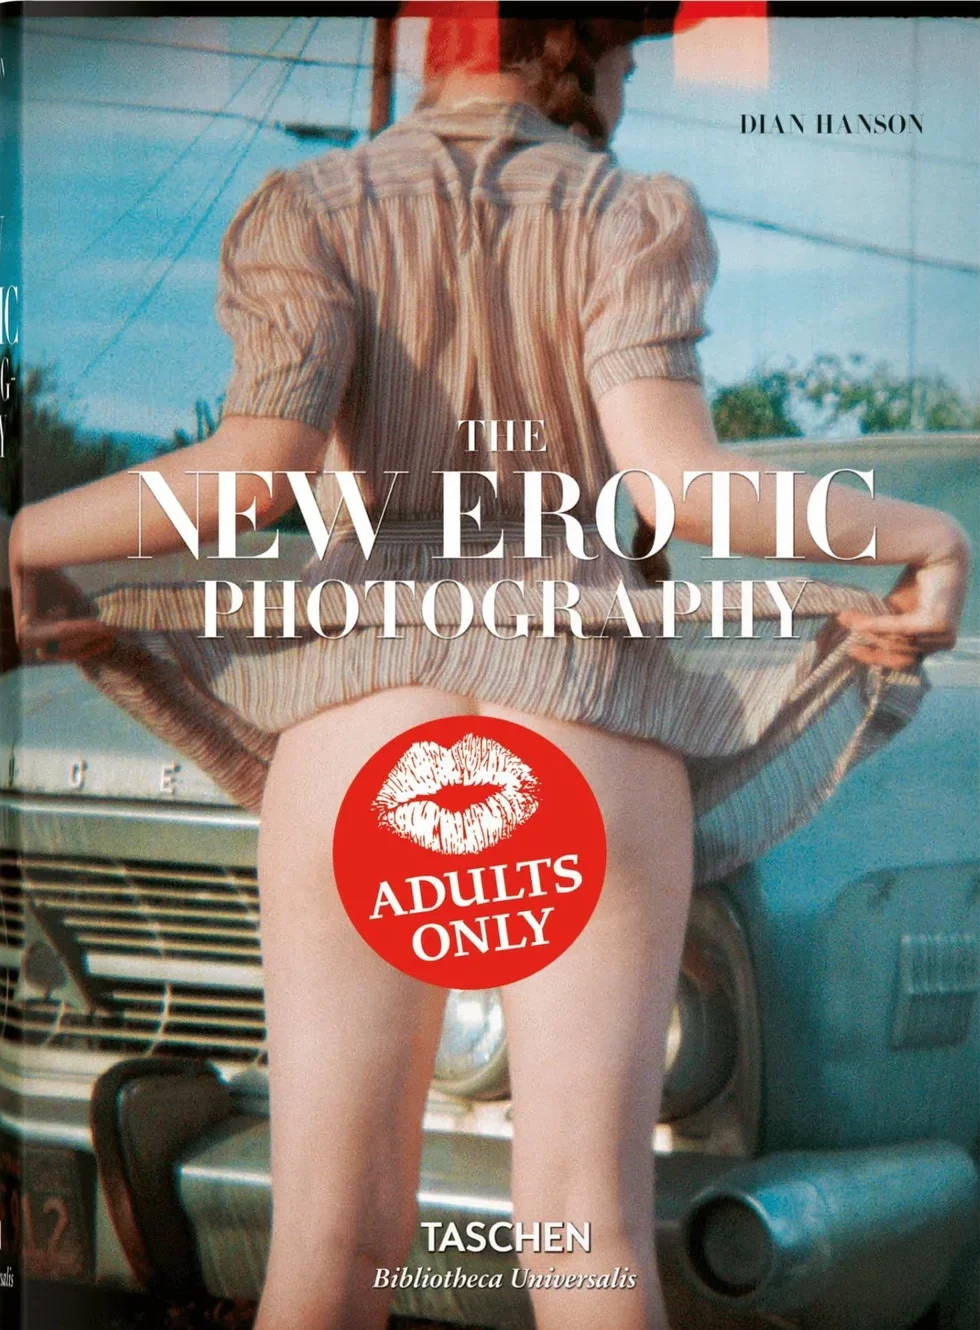 The new erotic photography Dian Hanson